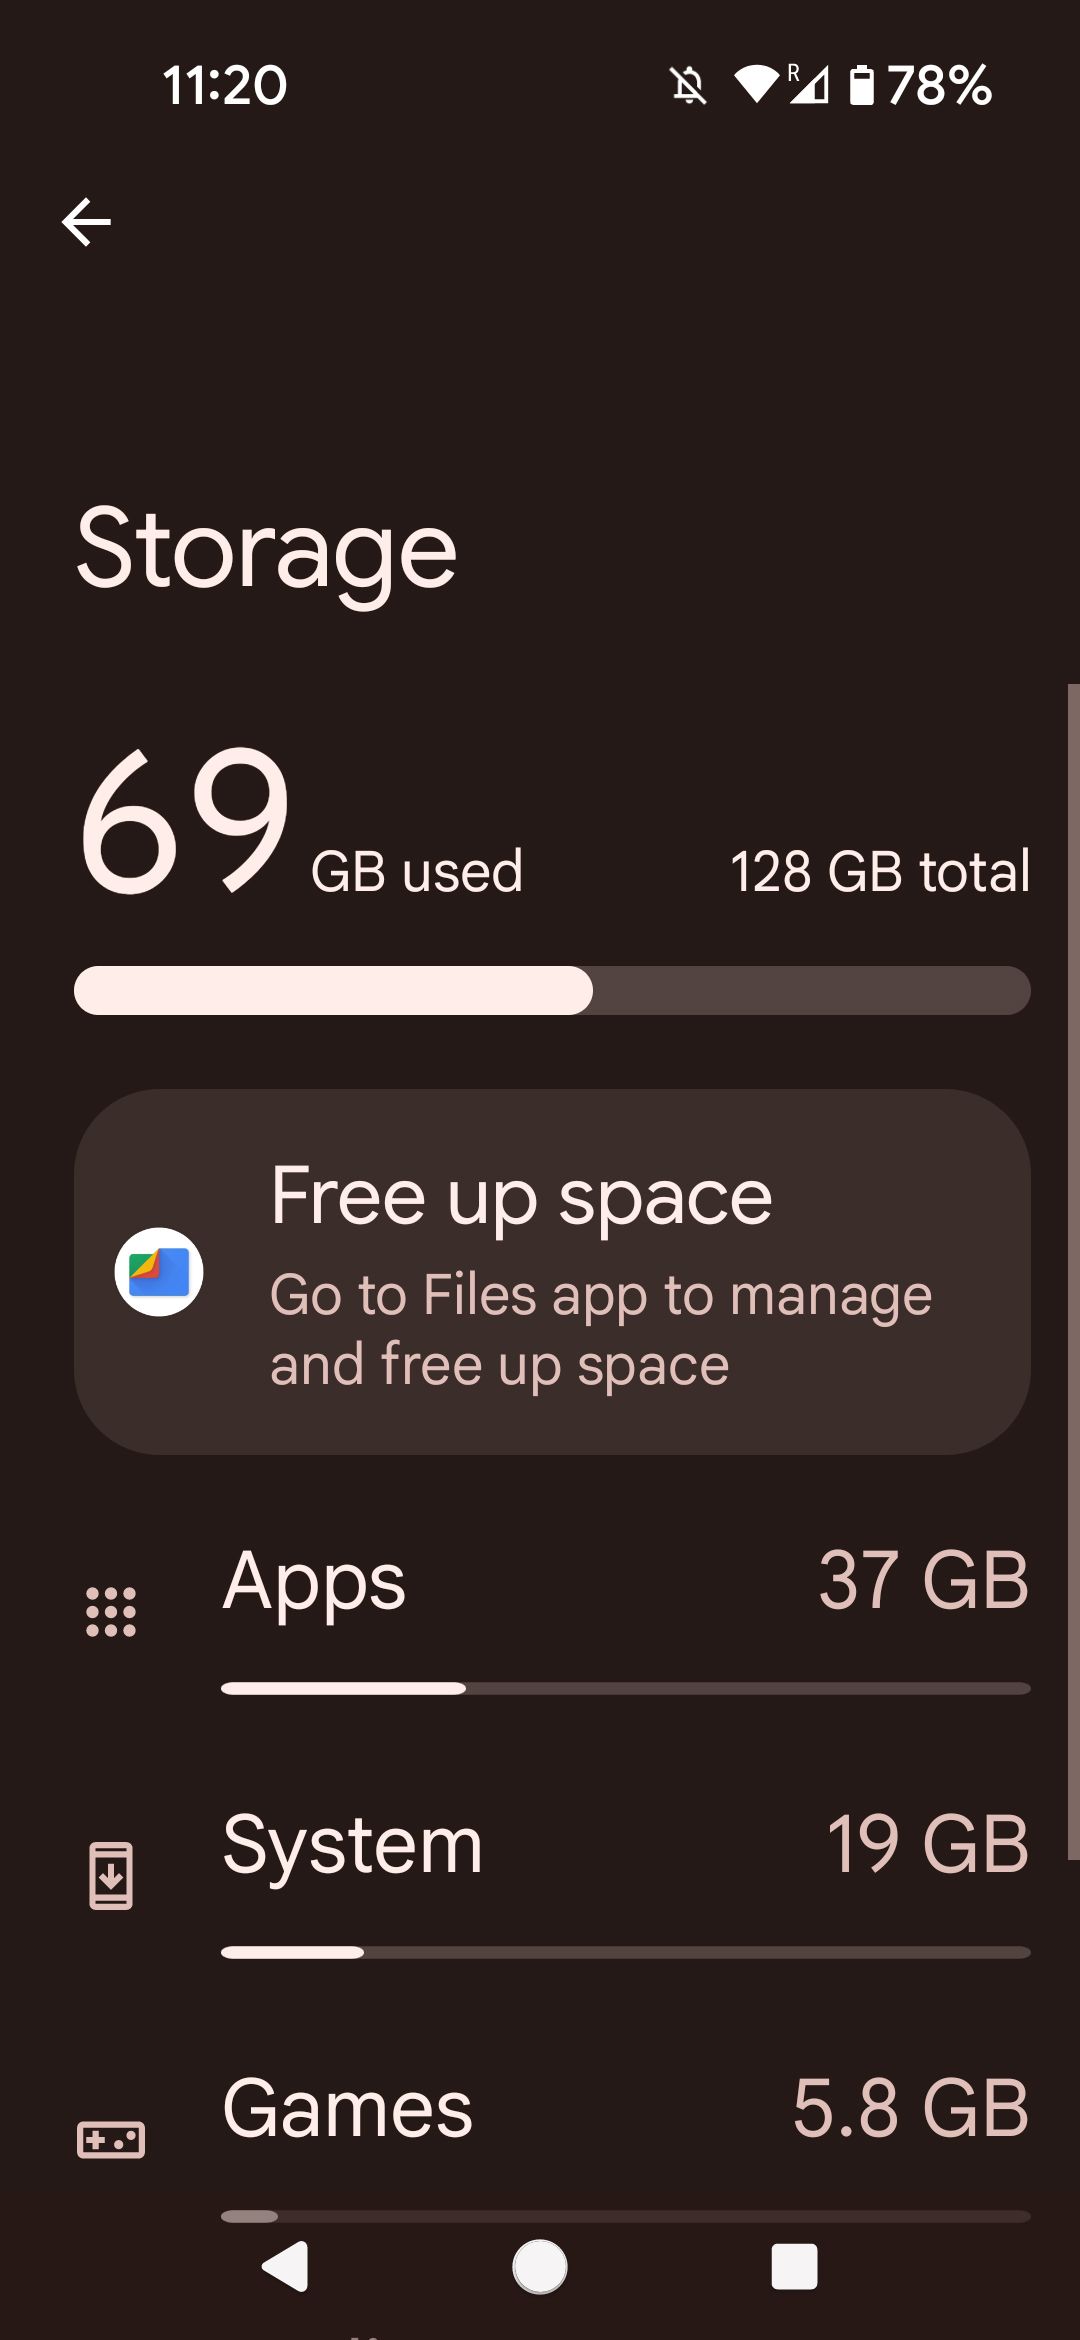 Android storage menu